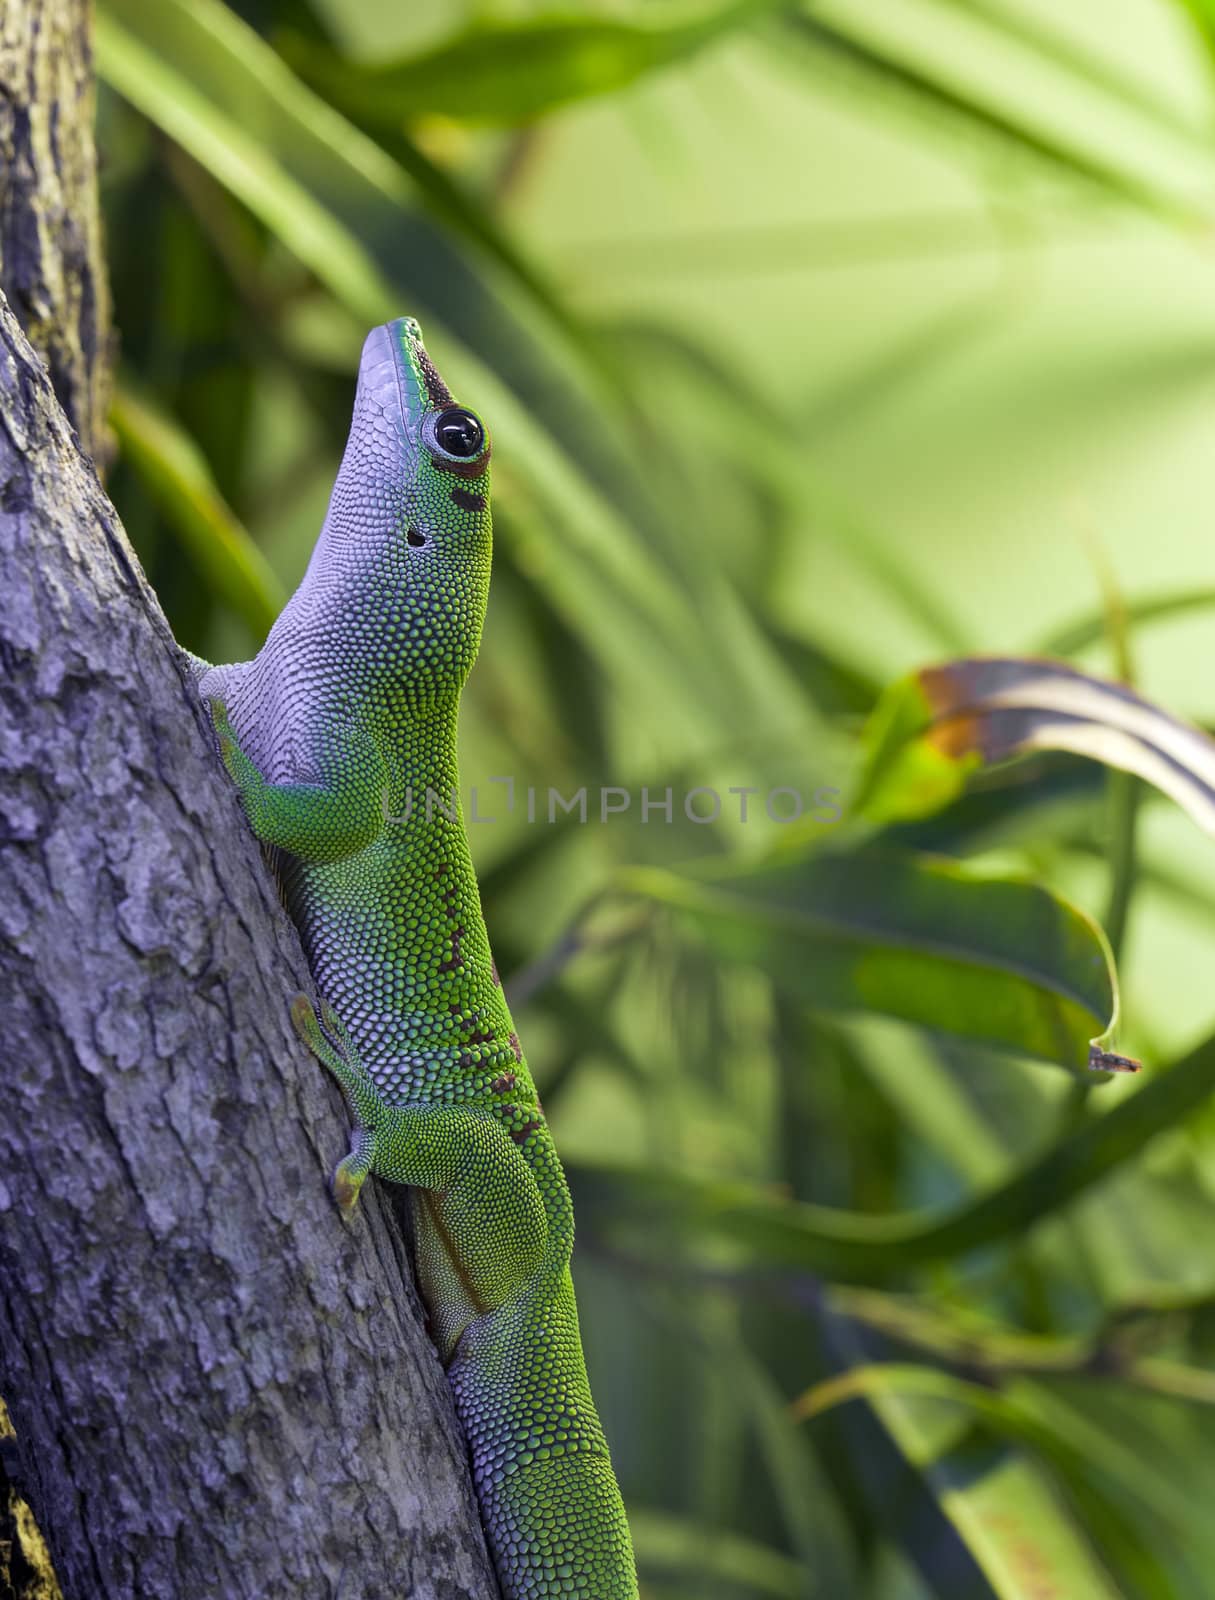 A close up shot of a Day Gecko (Phelsuma) on the base of a tree.